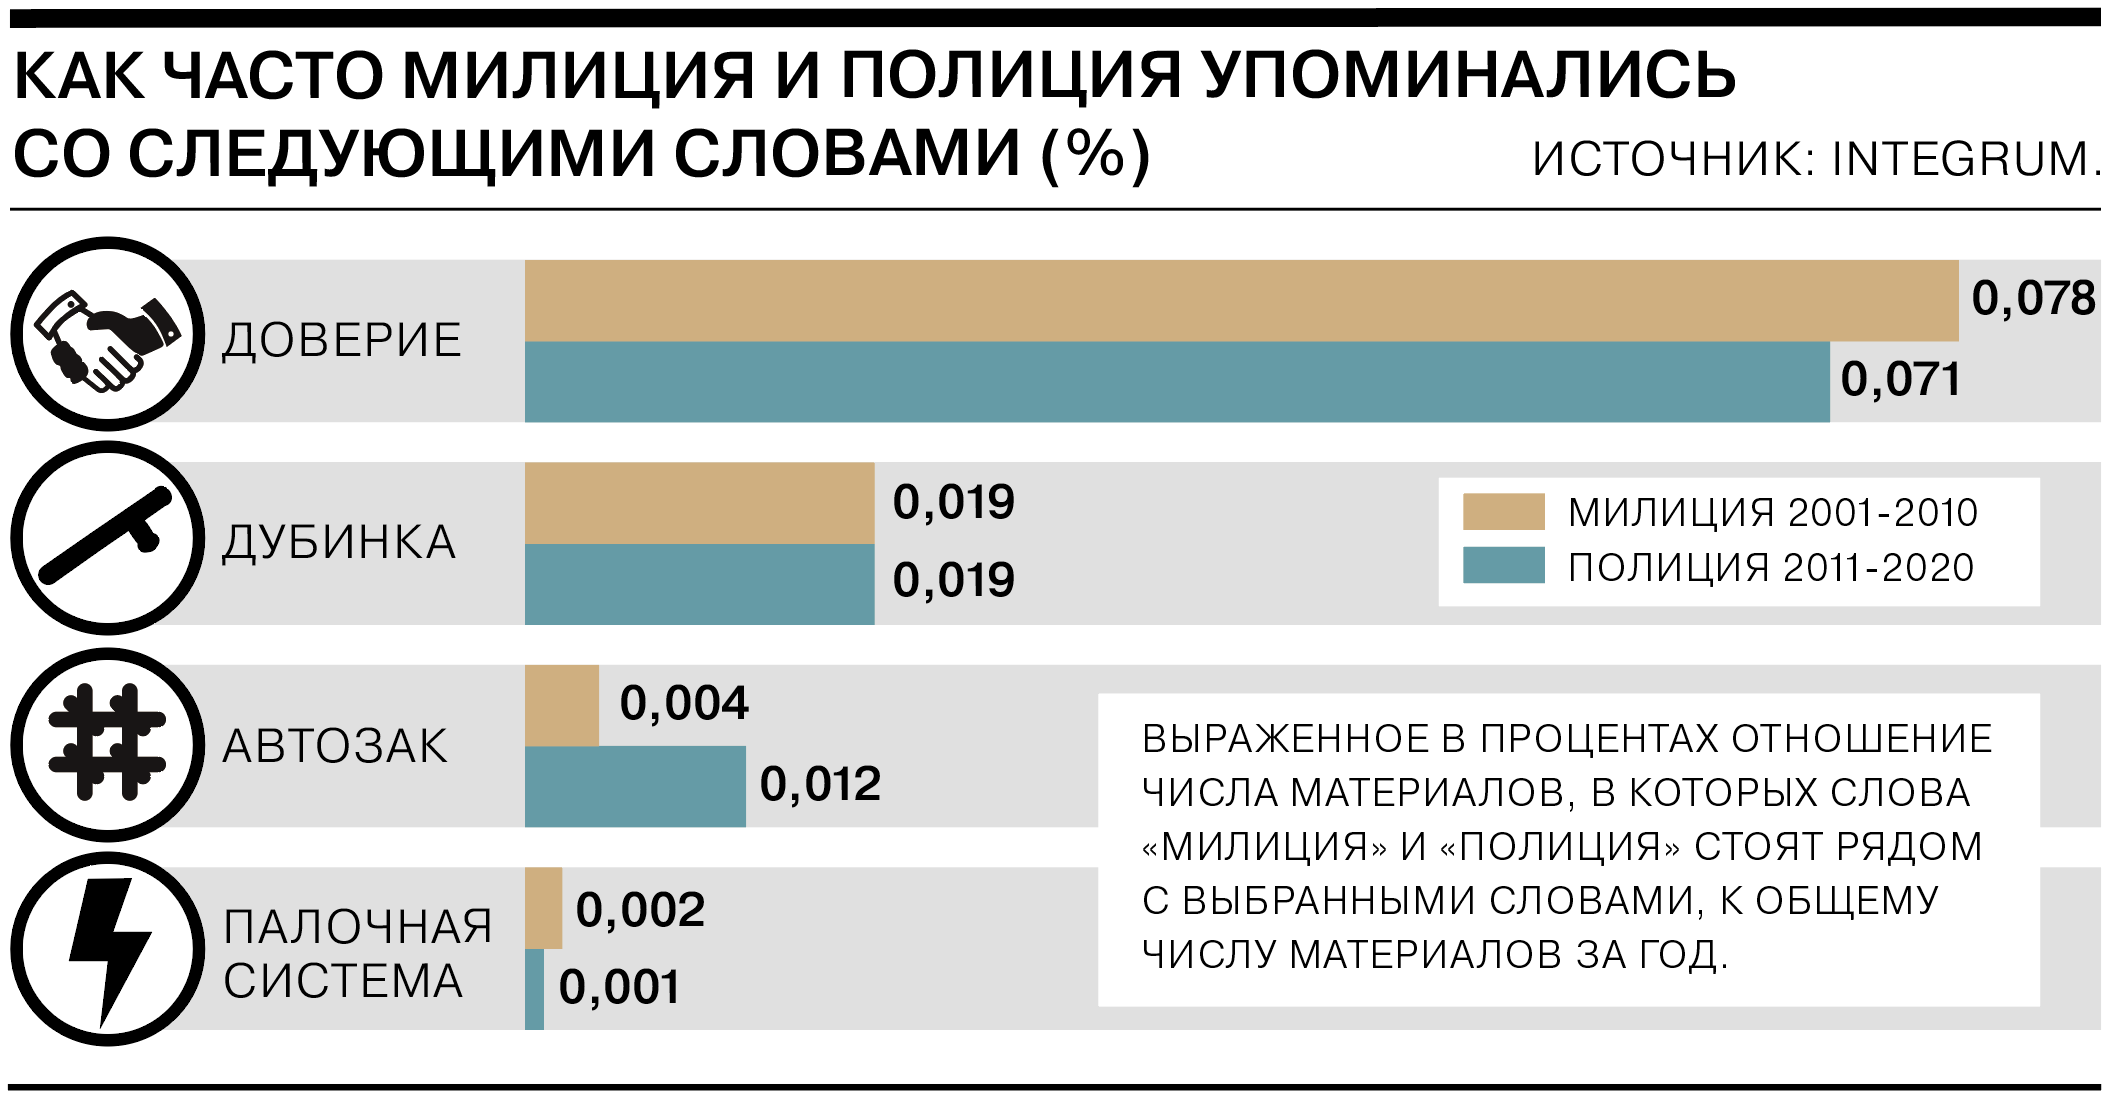 https://im.kommersant.ru/ISSUES.PHOTO/CORP/2021/02/05/7%D1%81%D0%BB%D0%BE%D0%B2%D0%B0.png